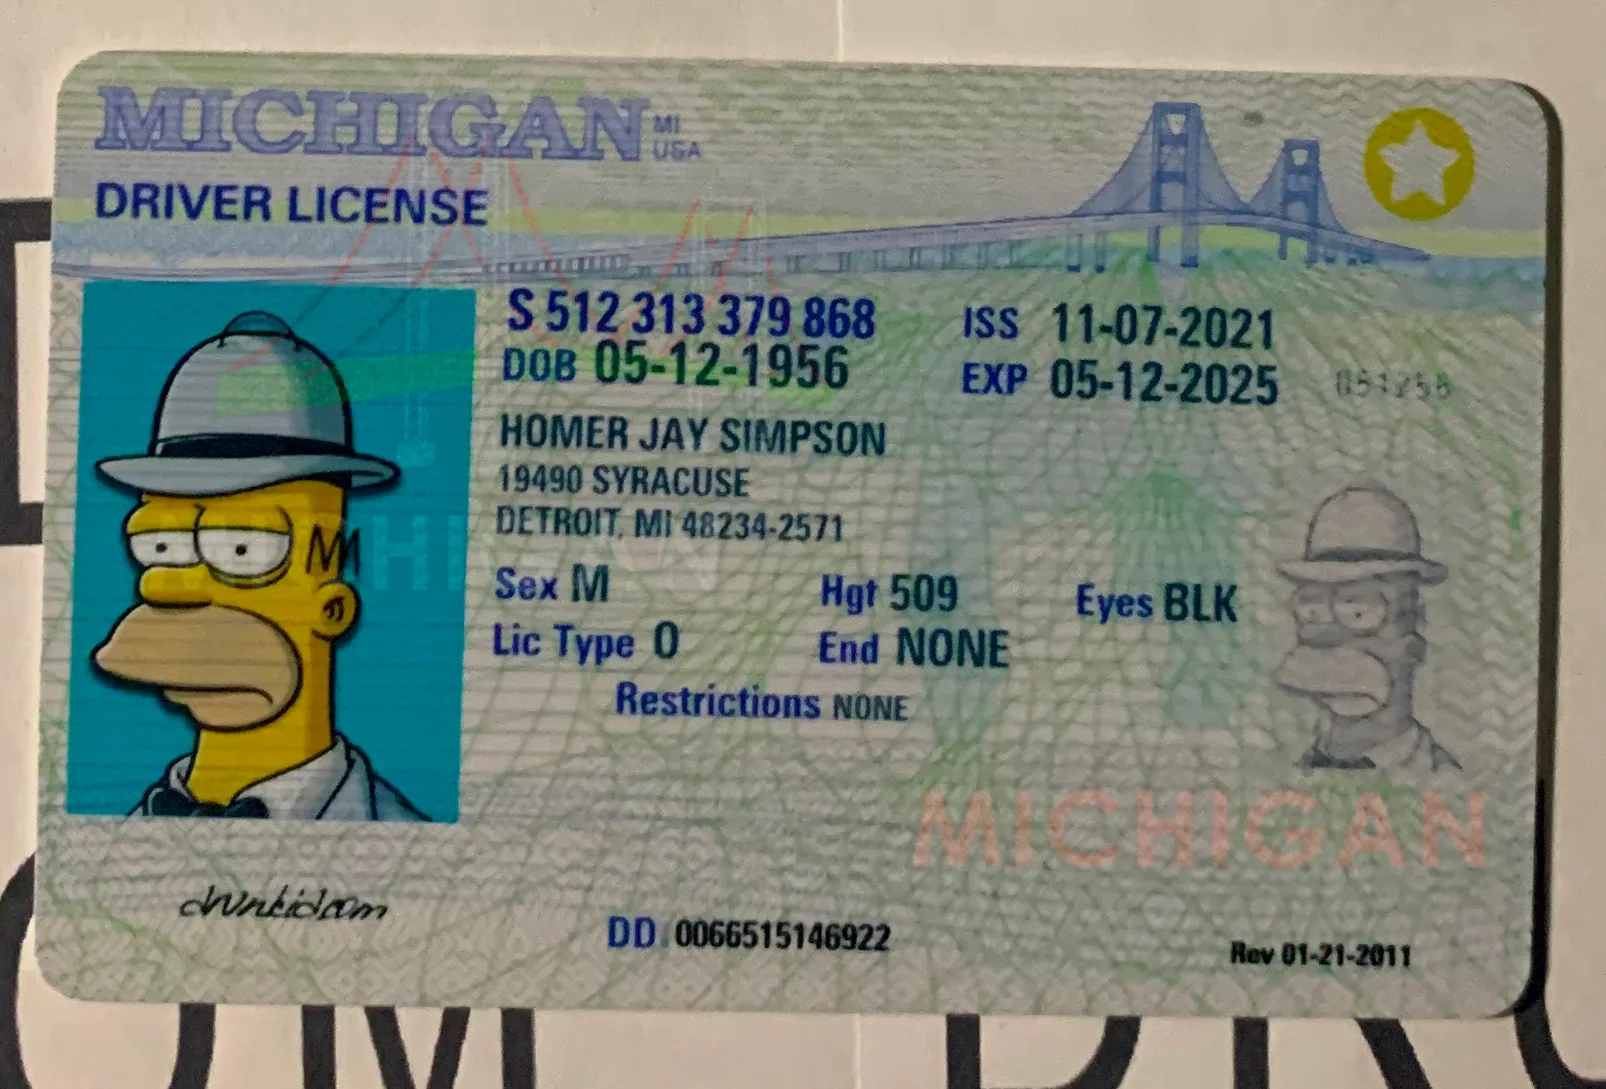 Buy Scannable Michigan Fake ID - Fake IDs Online